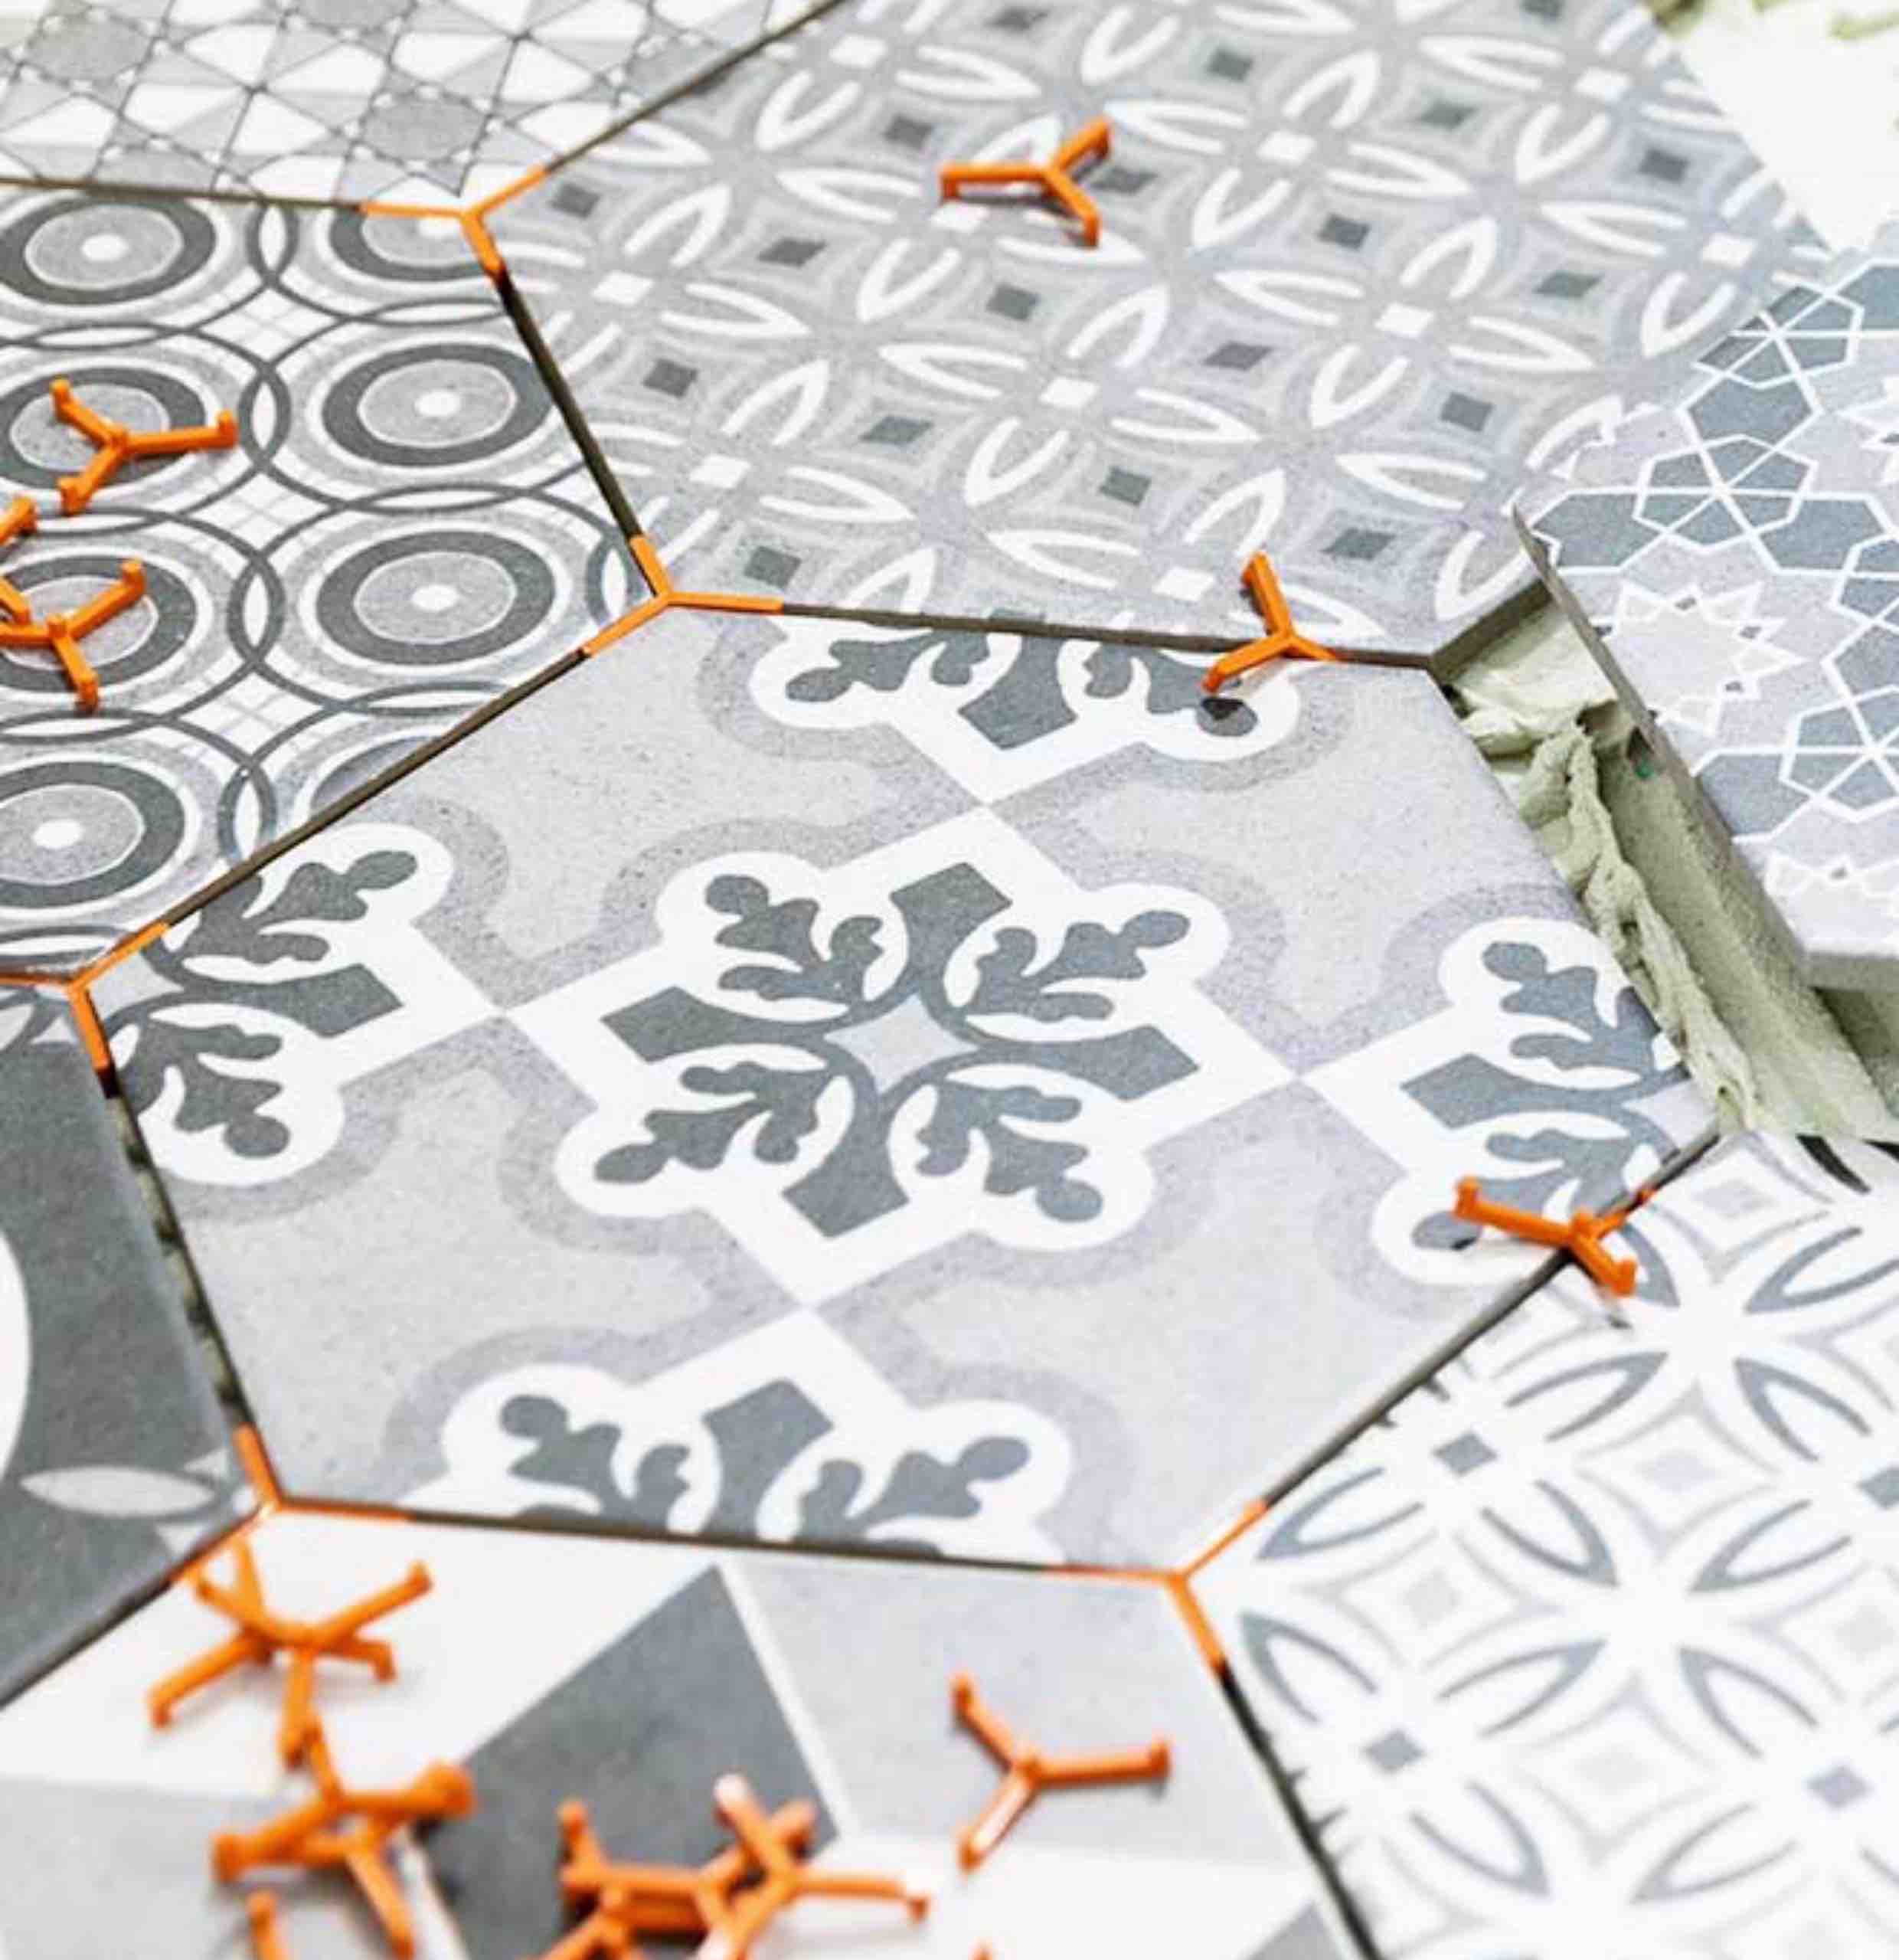 Trendy hexagonal tiles installed by Footprints Floors in Wilmington / Southport.